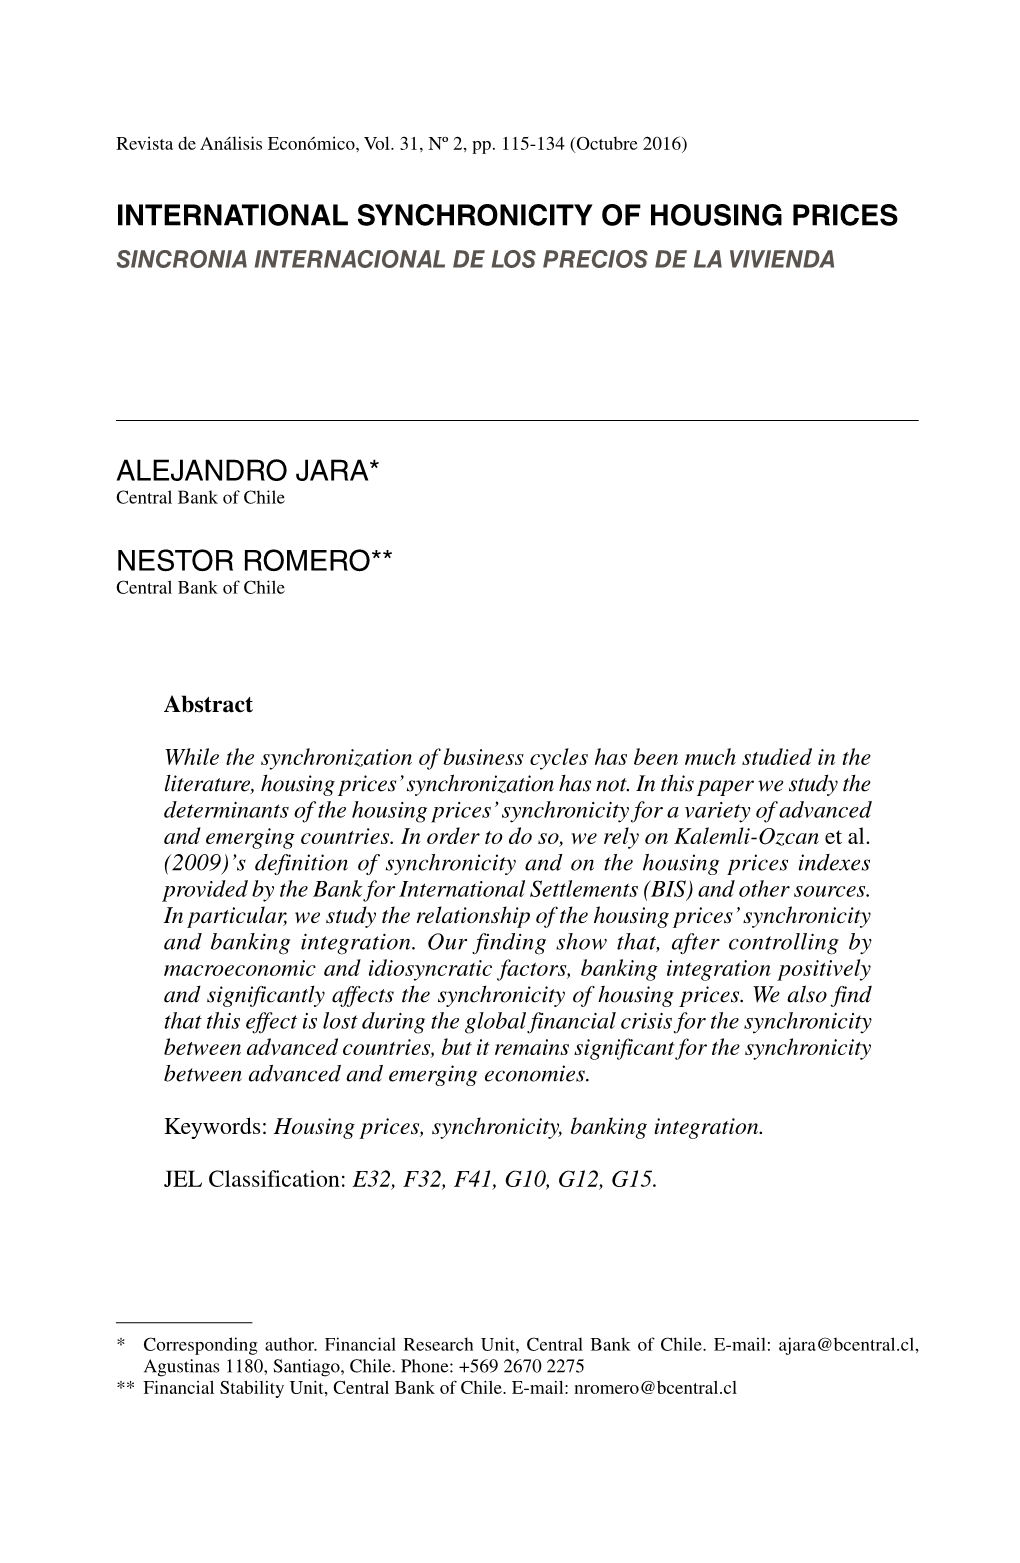 International Synchronicity of Housing Prices Alejandro Jara* Nestor Romero**